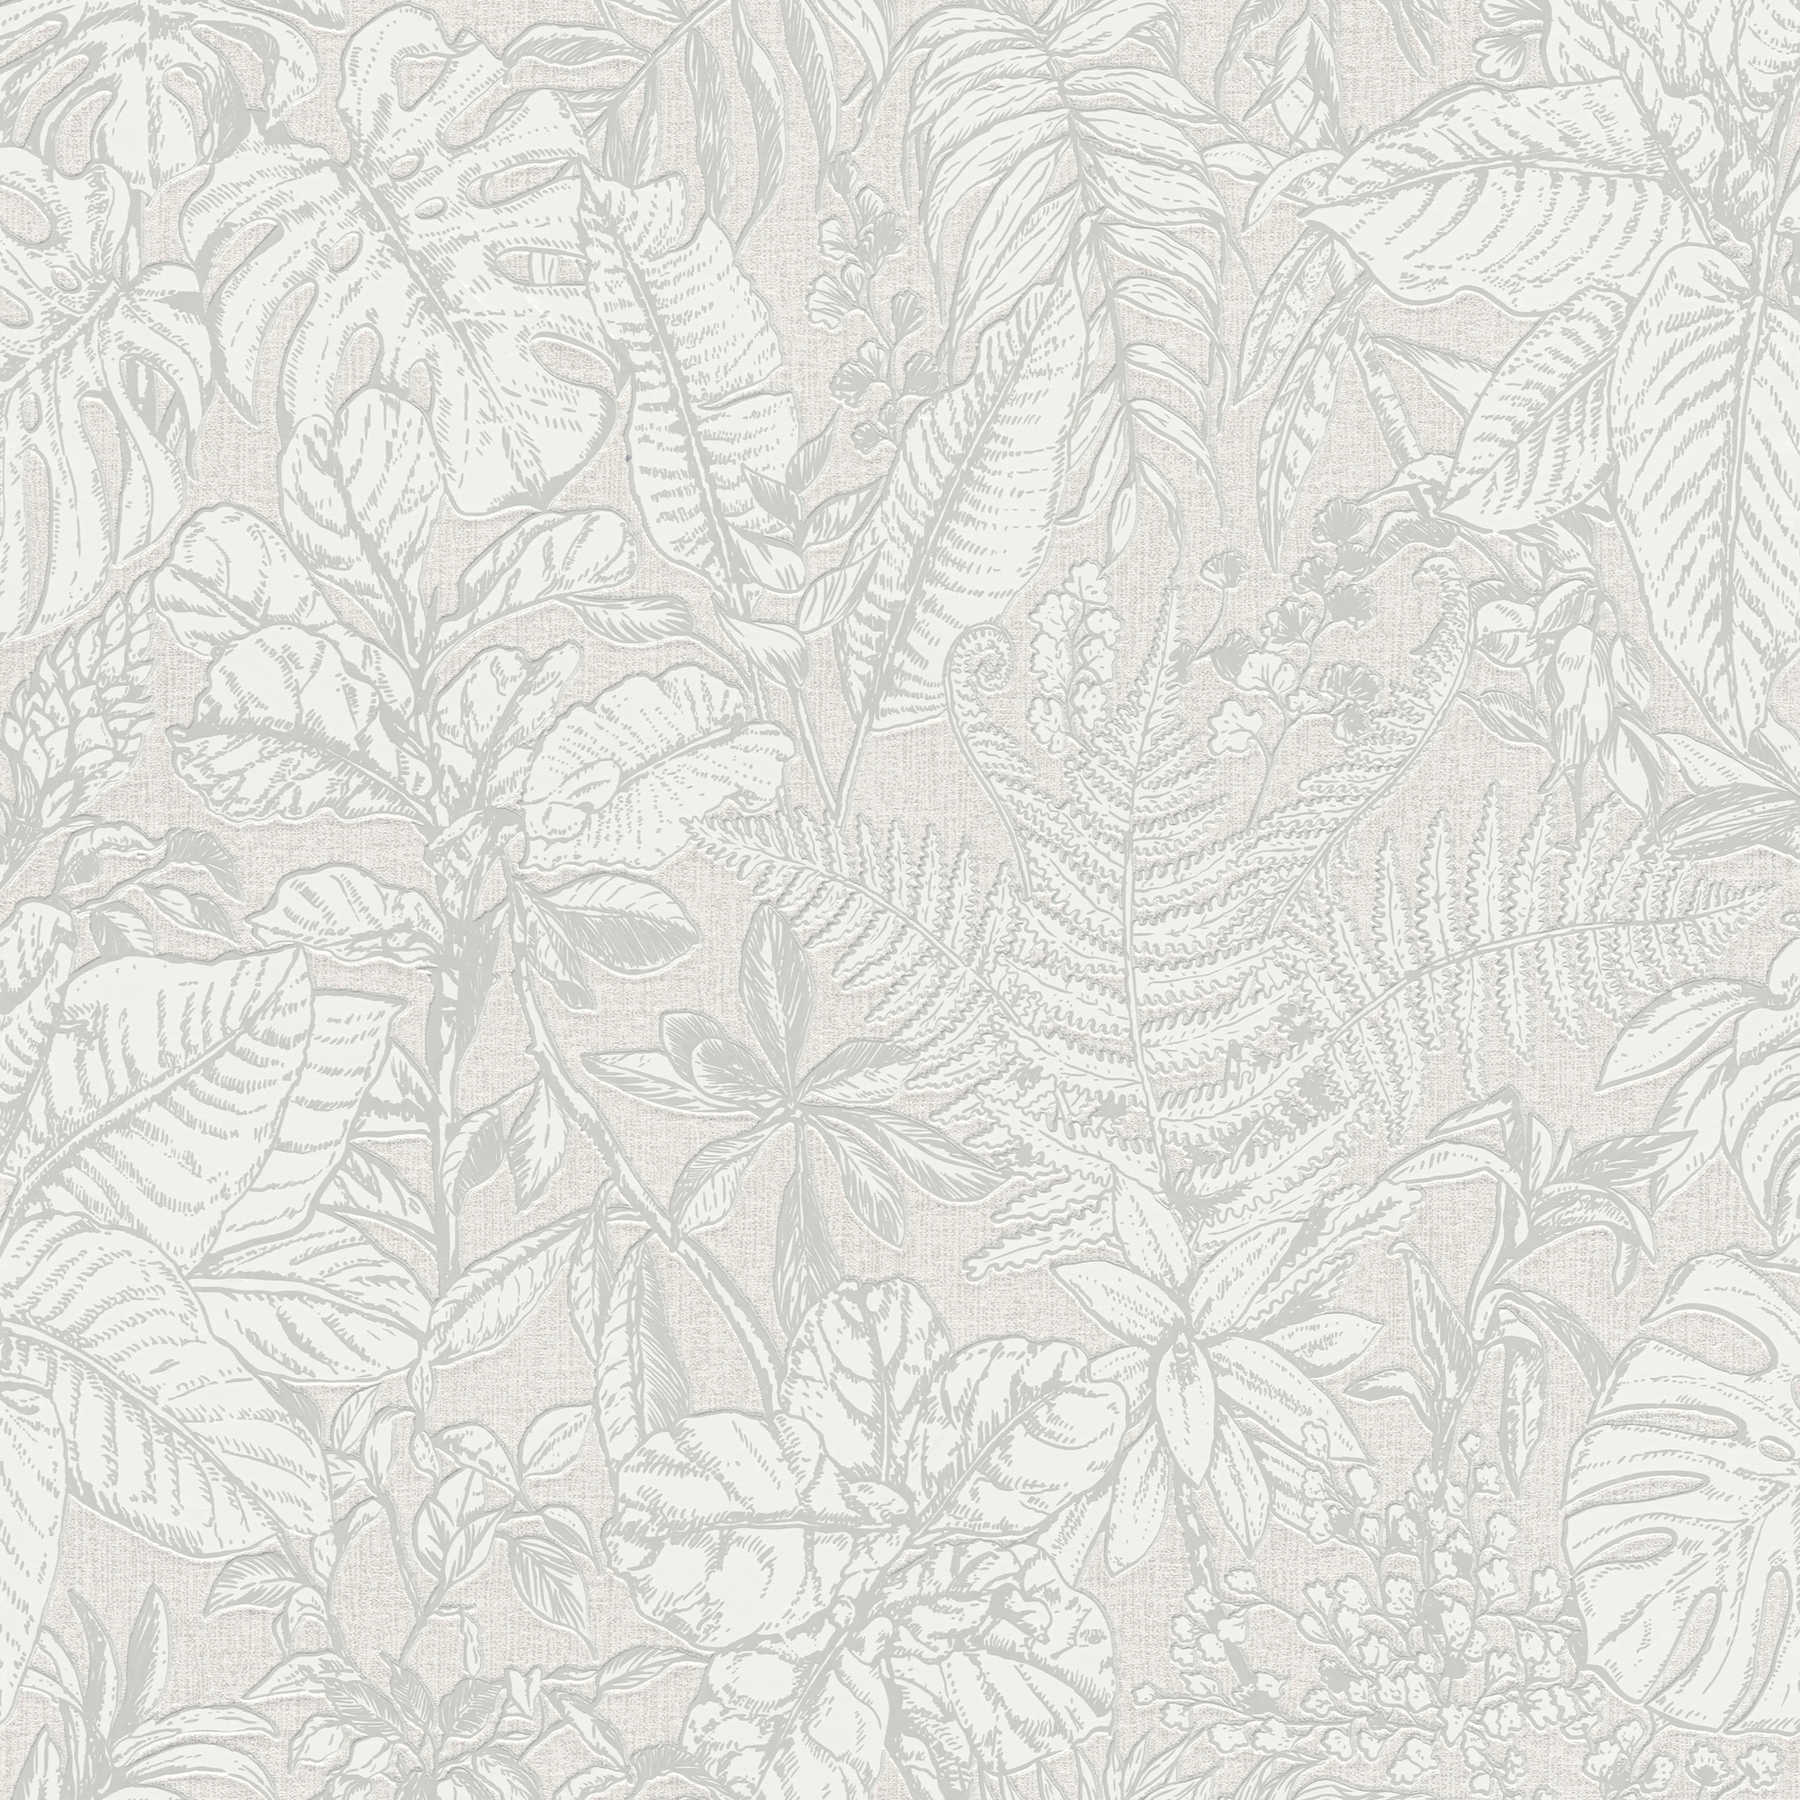 Jungle wallpaper, monstera leaves & ferns - grey, white
